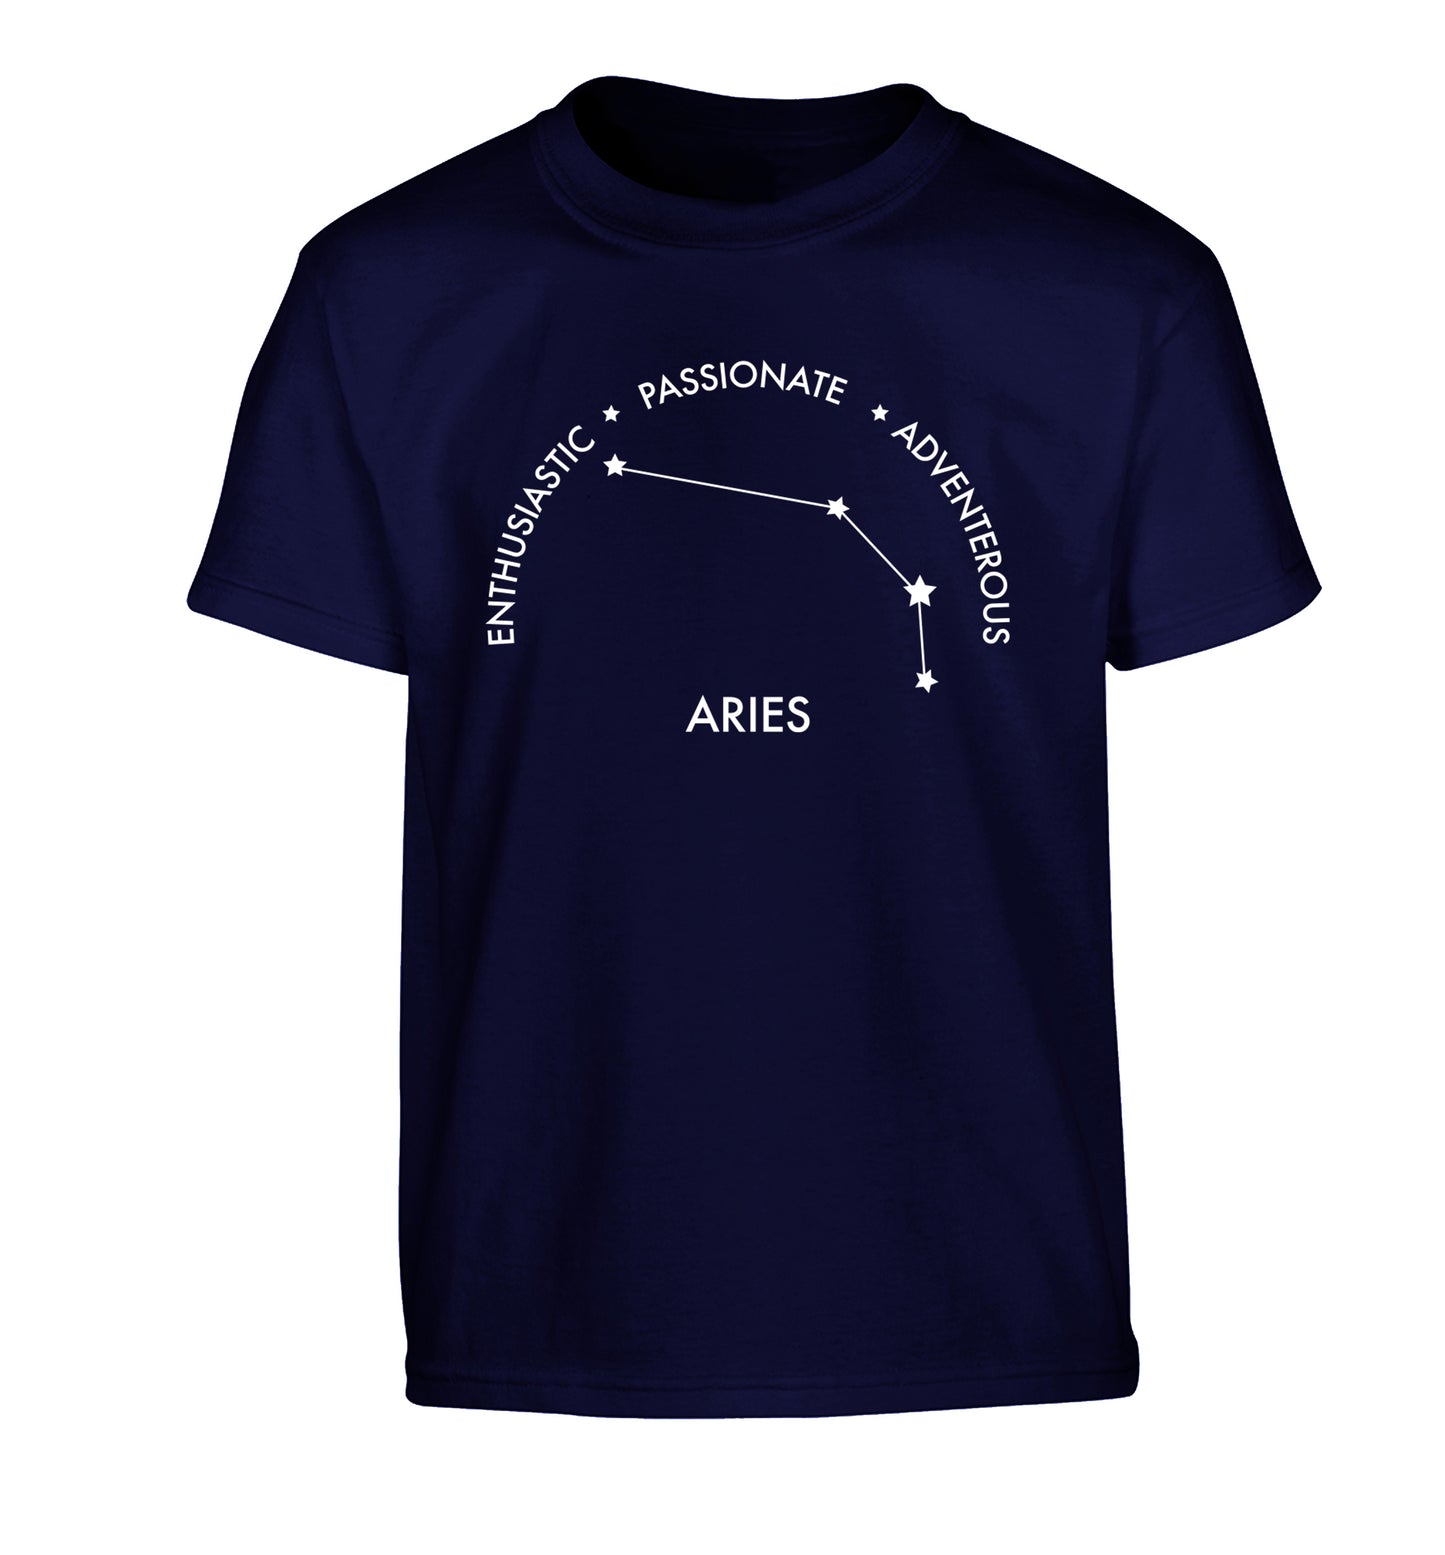 Aries enthusiastic | passionate | adventerous Children's navy Tshirt 12-13 Years